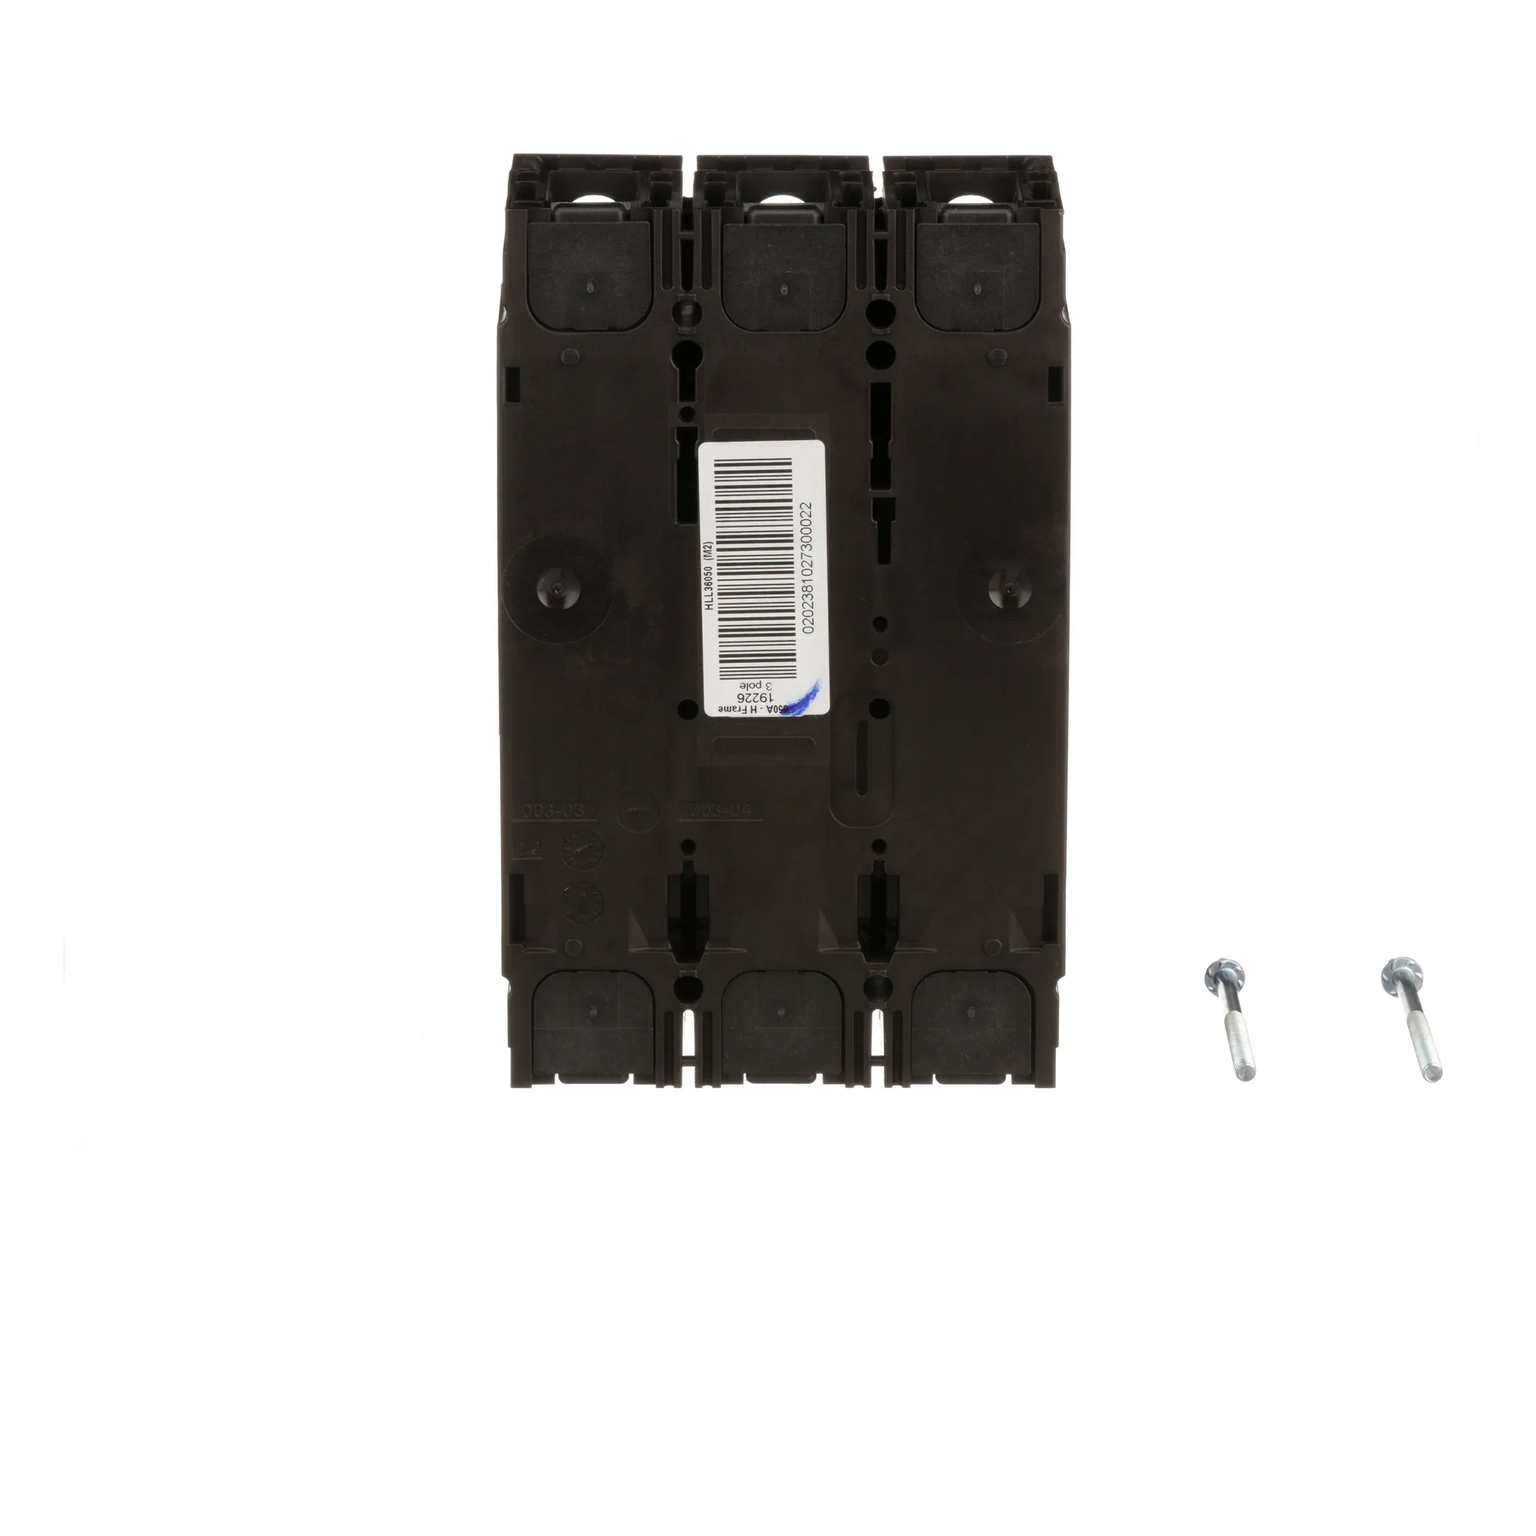 HLL36050 - Square D - Molded Case Circuit Breaker